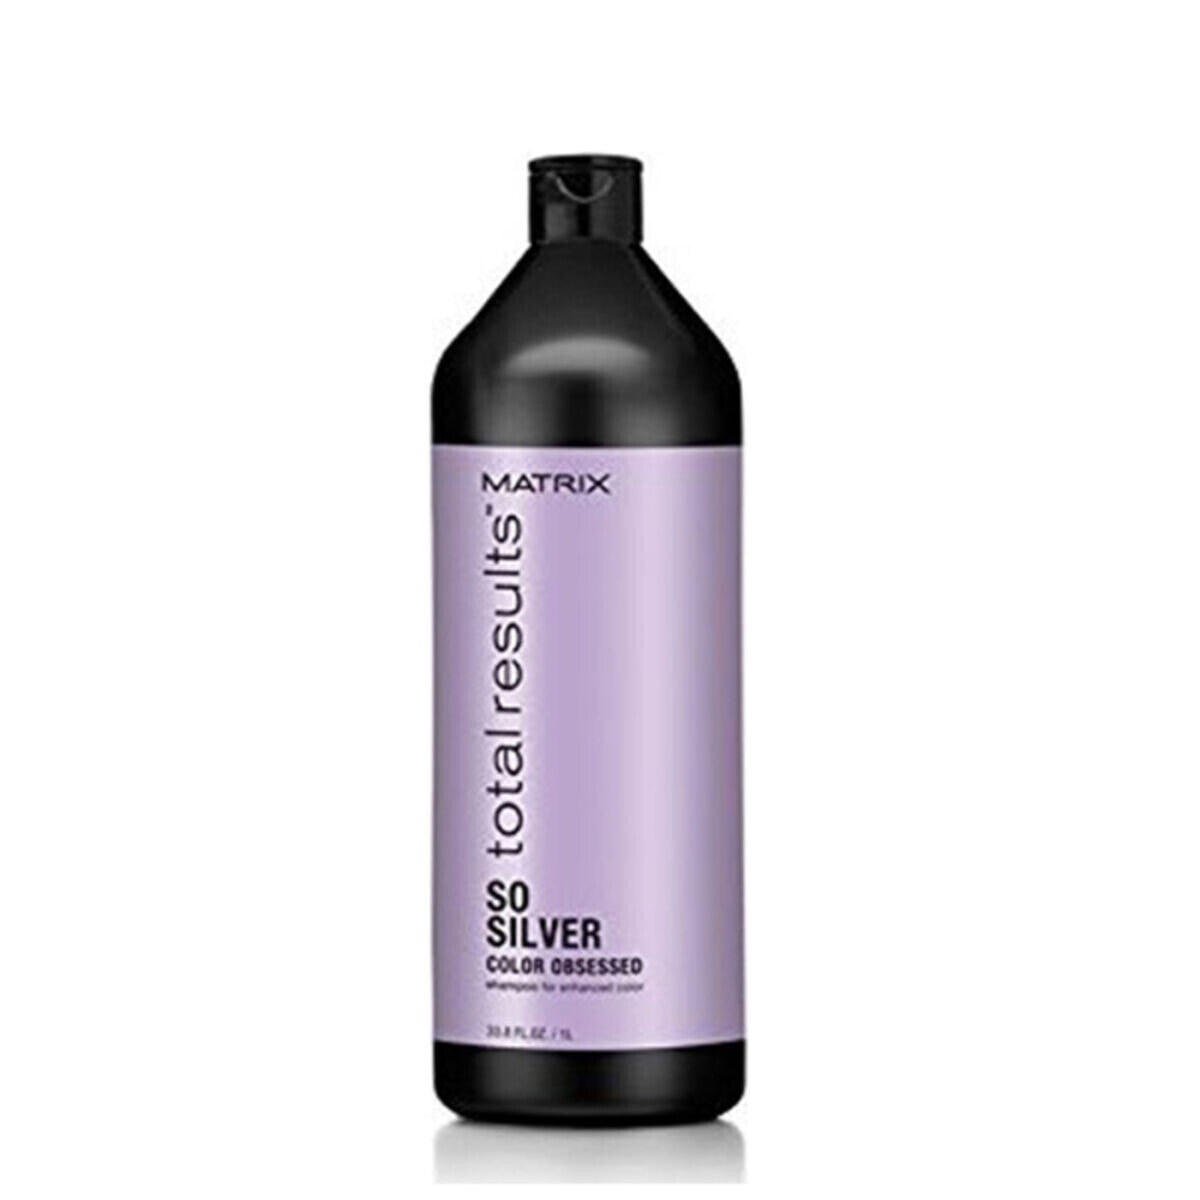 Matrix Total Results So Silver Shampoo Оттеночный шампунь для светлых волос, оттенок серебристый  1000 мл